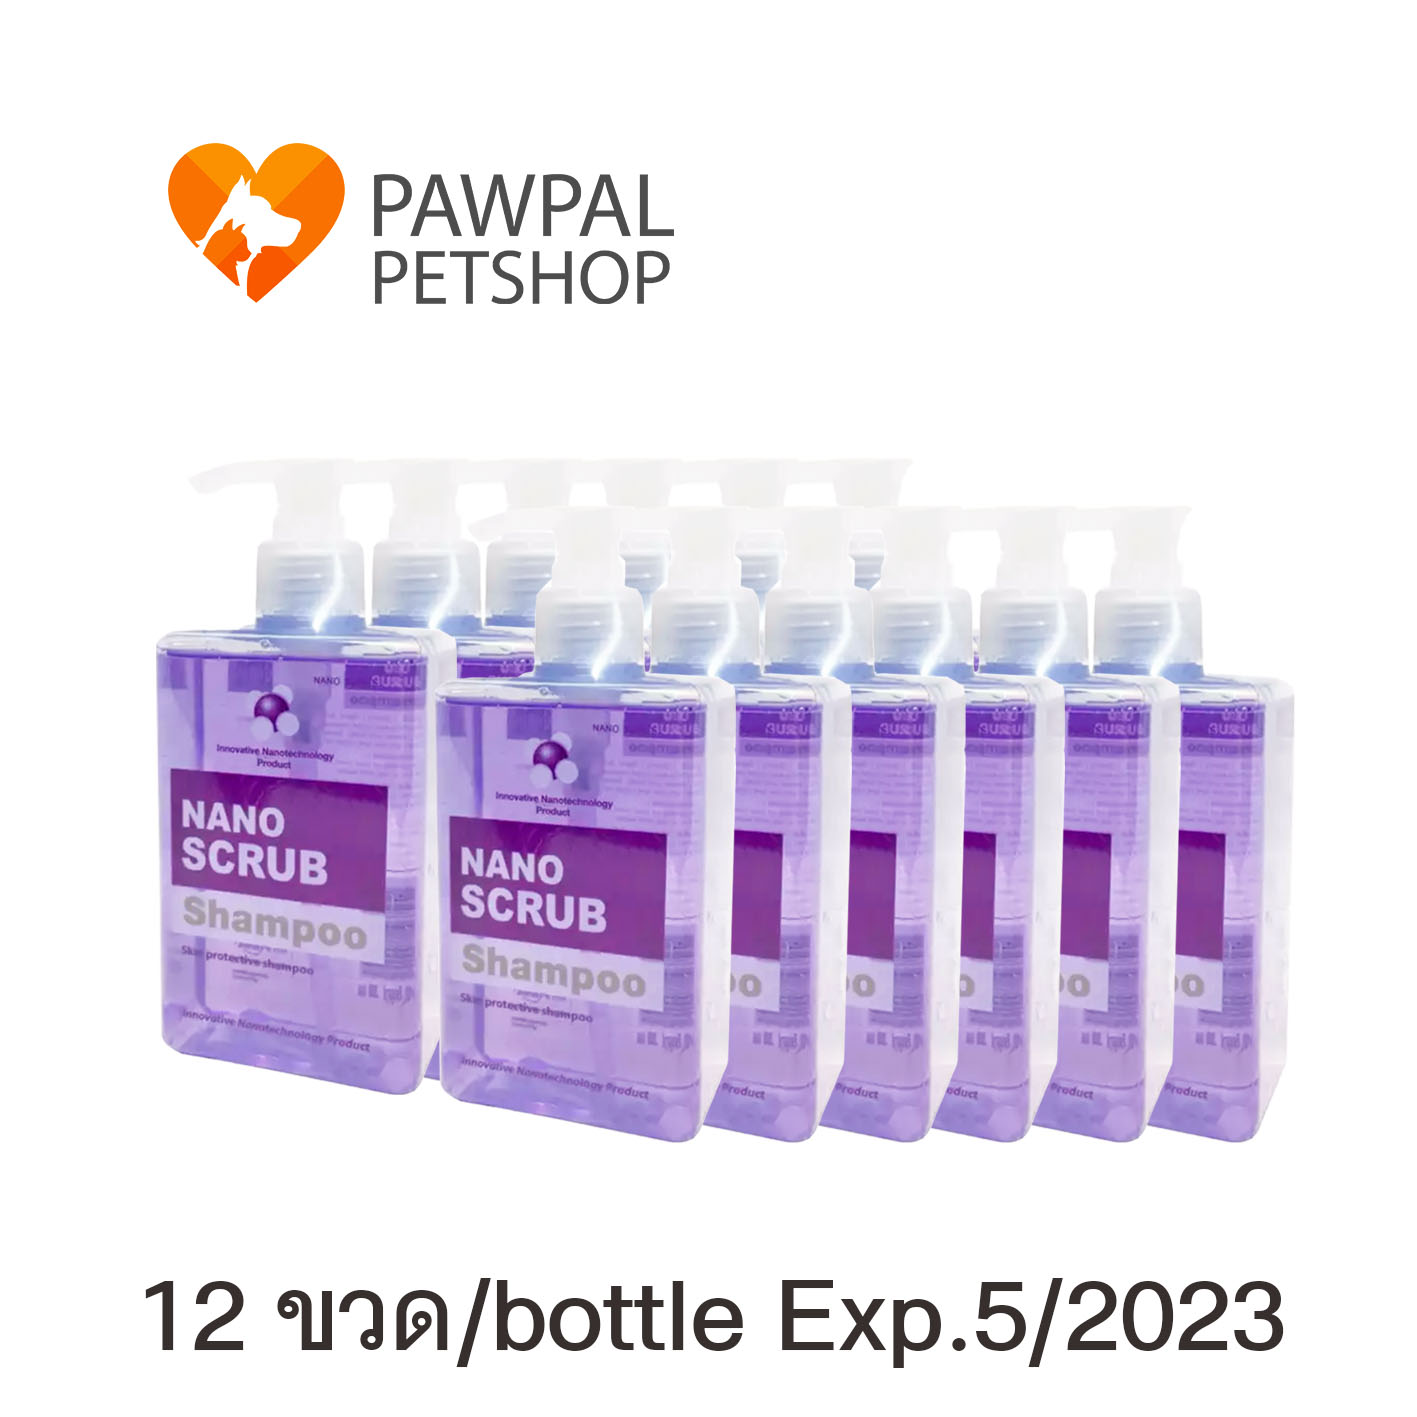 Nano Scrub Shampoo แชมพู นาโน สครับ 280 ml Exp.5/2023 Vet Planet สูตรอ่อนโยน ไม่ระคายเคือง ฆ่าเชื้อโรค แบคทีเรีย ลดกลิ่นตัว สุนัข แมว dog cat (12 ขวด/bottles)